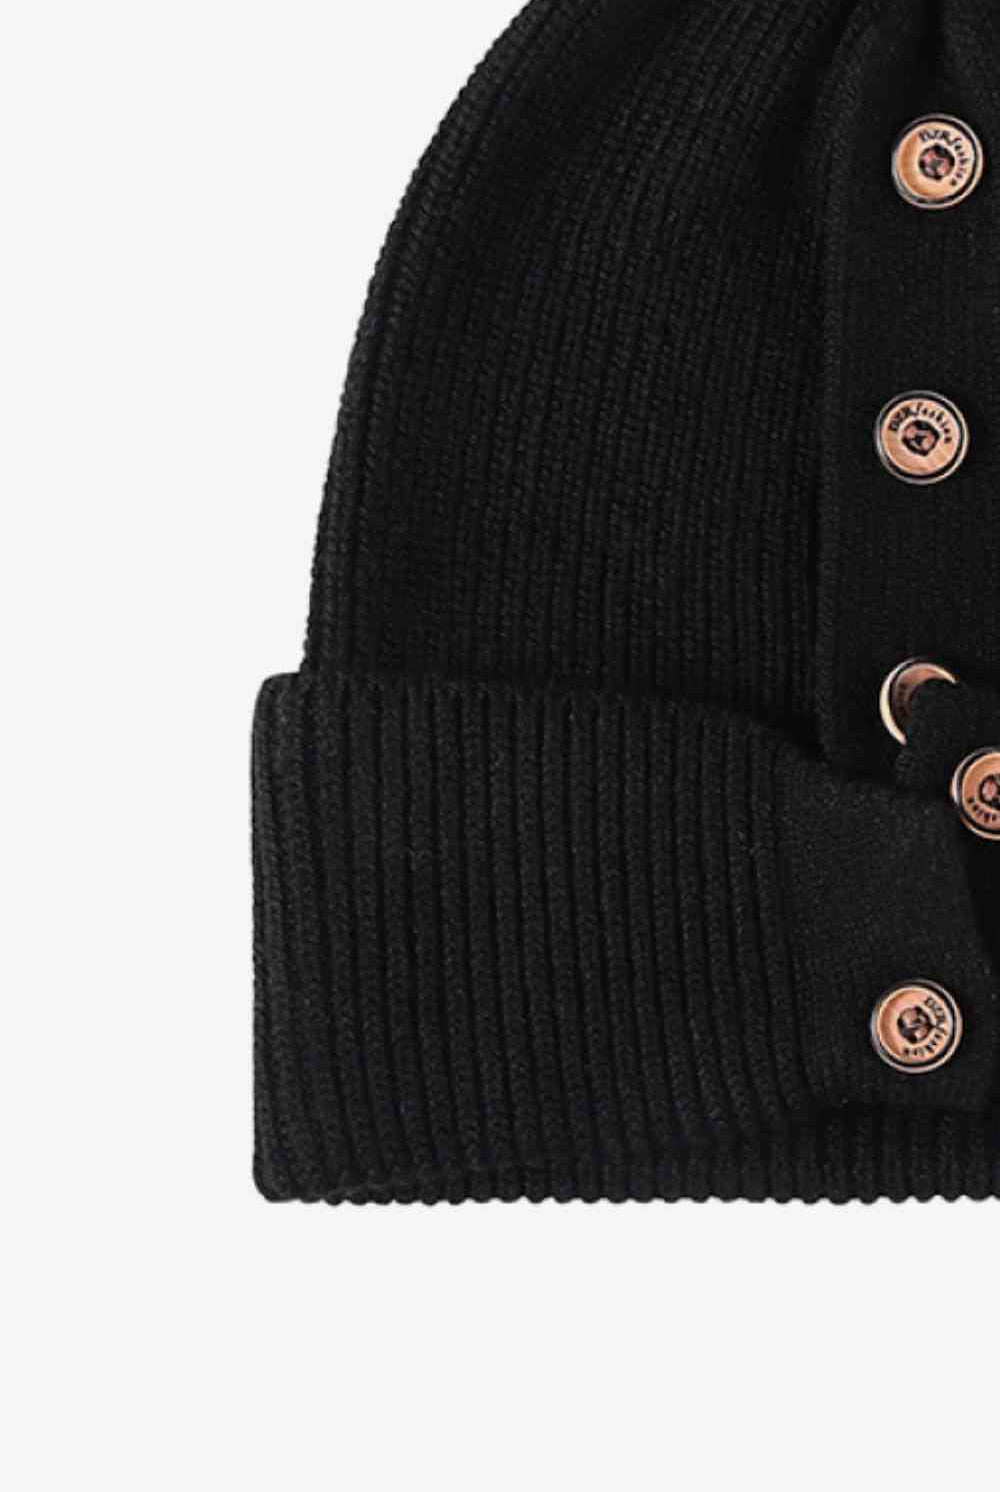 White Smoke Button Detail Rib-Knit Cuff Beanie Winter Accessories